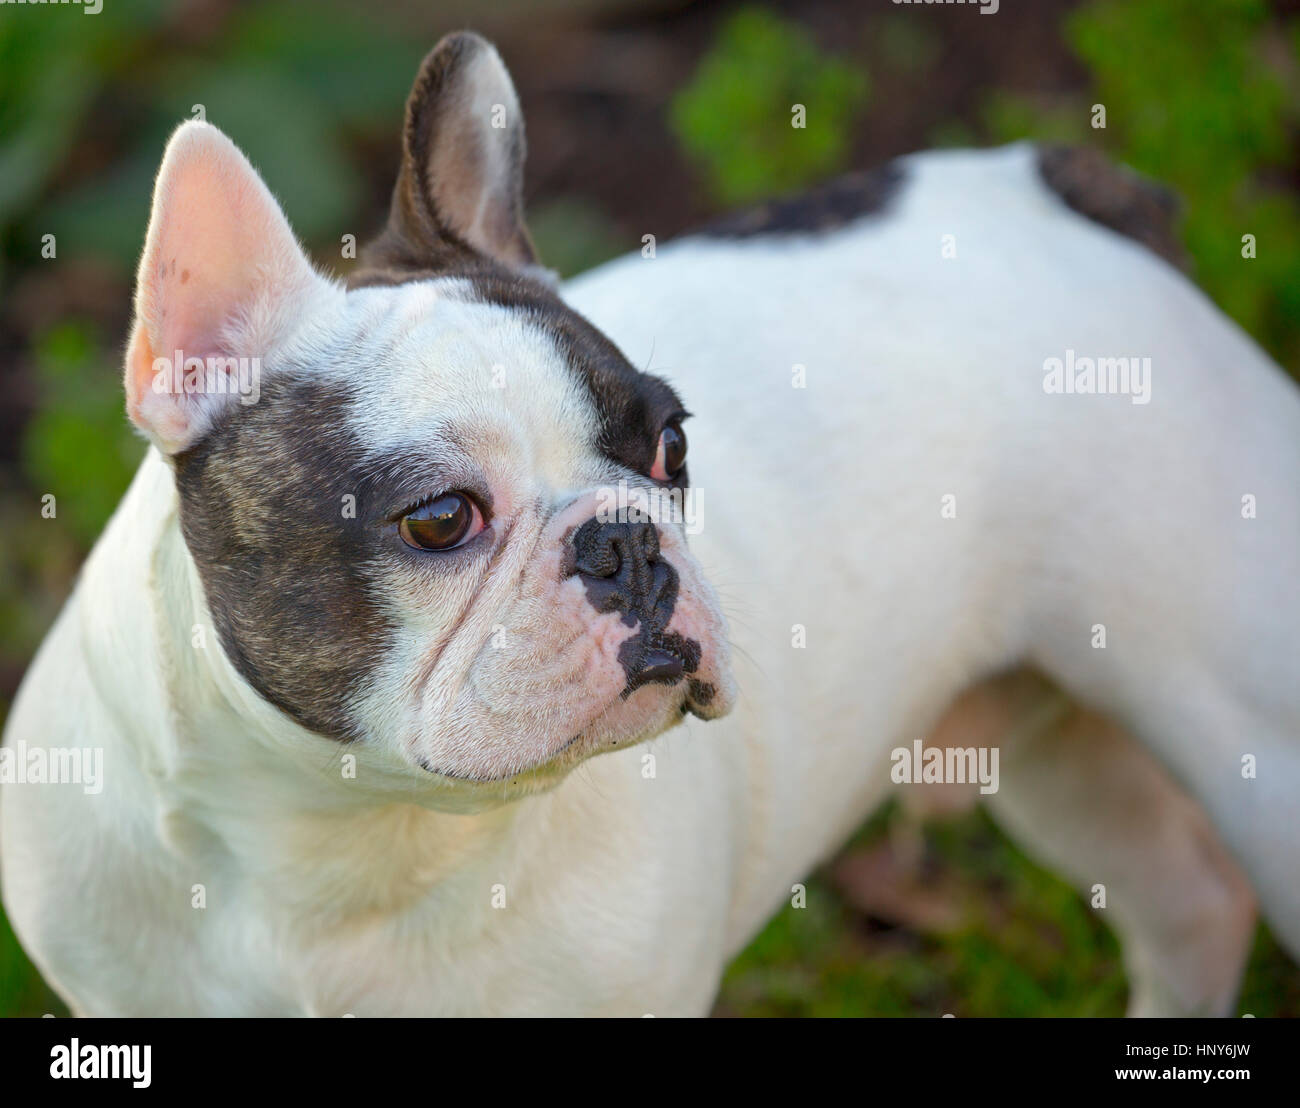 French Bulldog portrait in garden Stock Photo